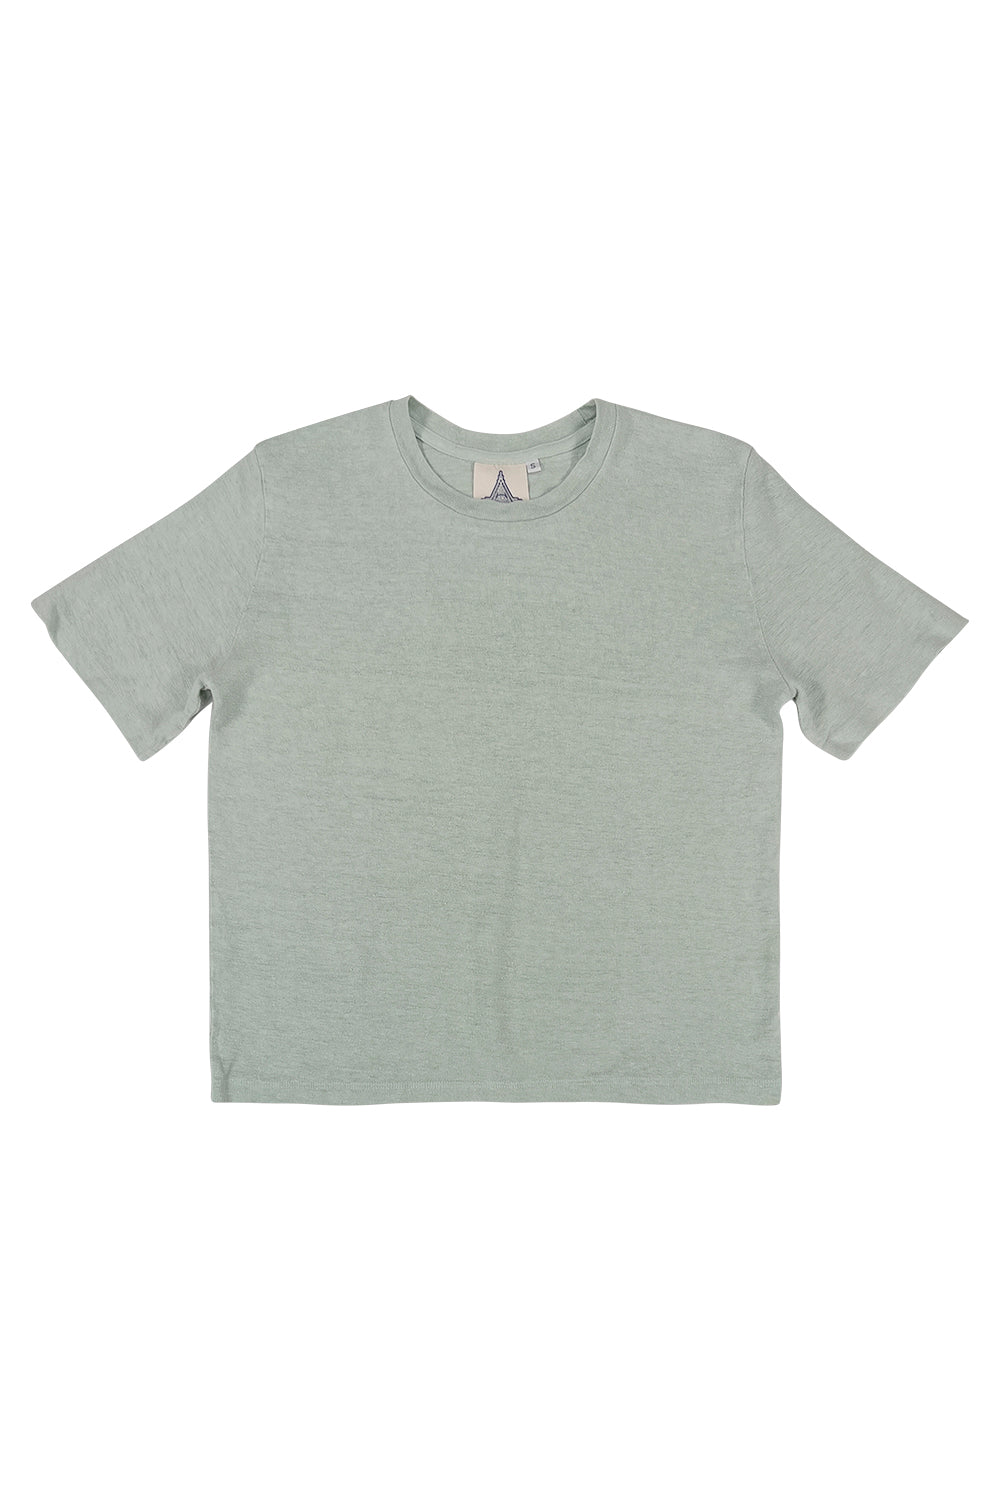 Dakota - 100% Hemp Cropped Tee | Jungmaven Hemp Clothing & Accessories / Color: Seafoam Green